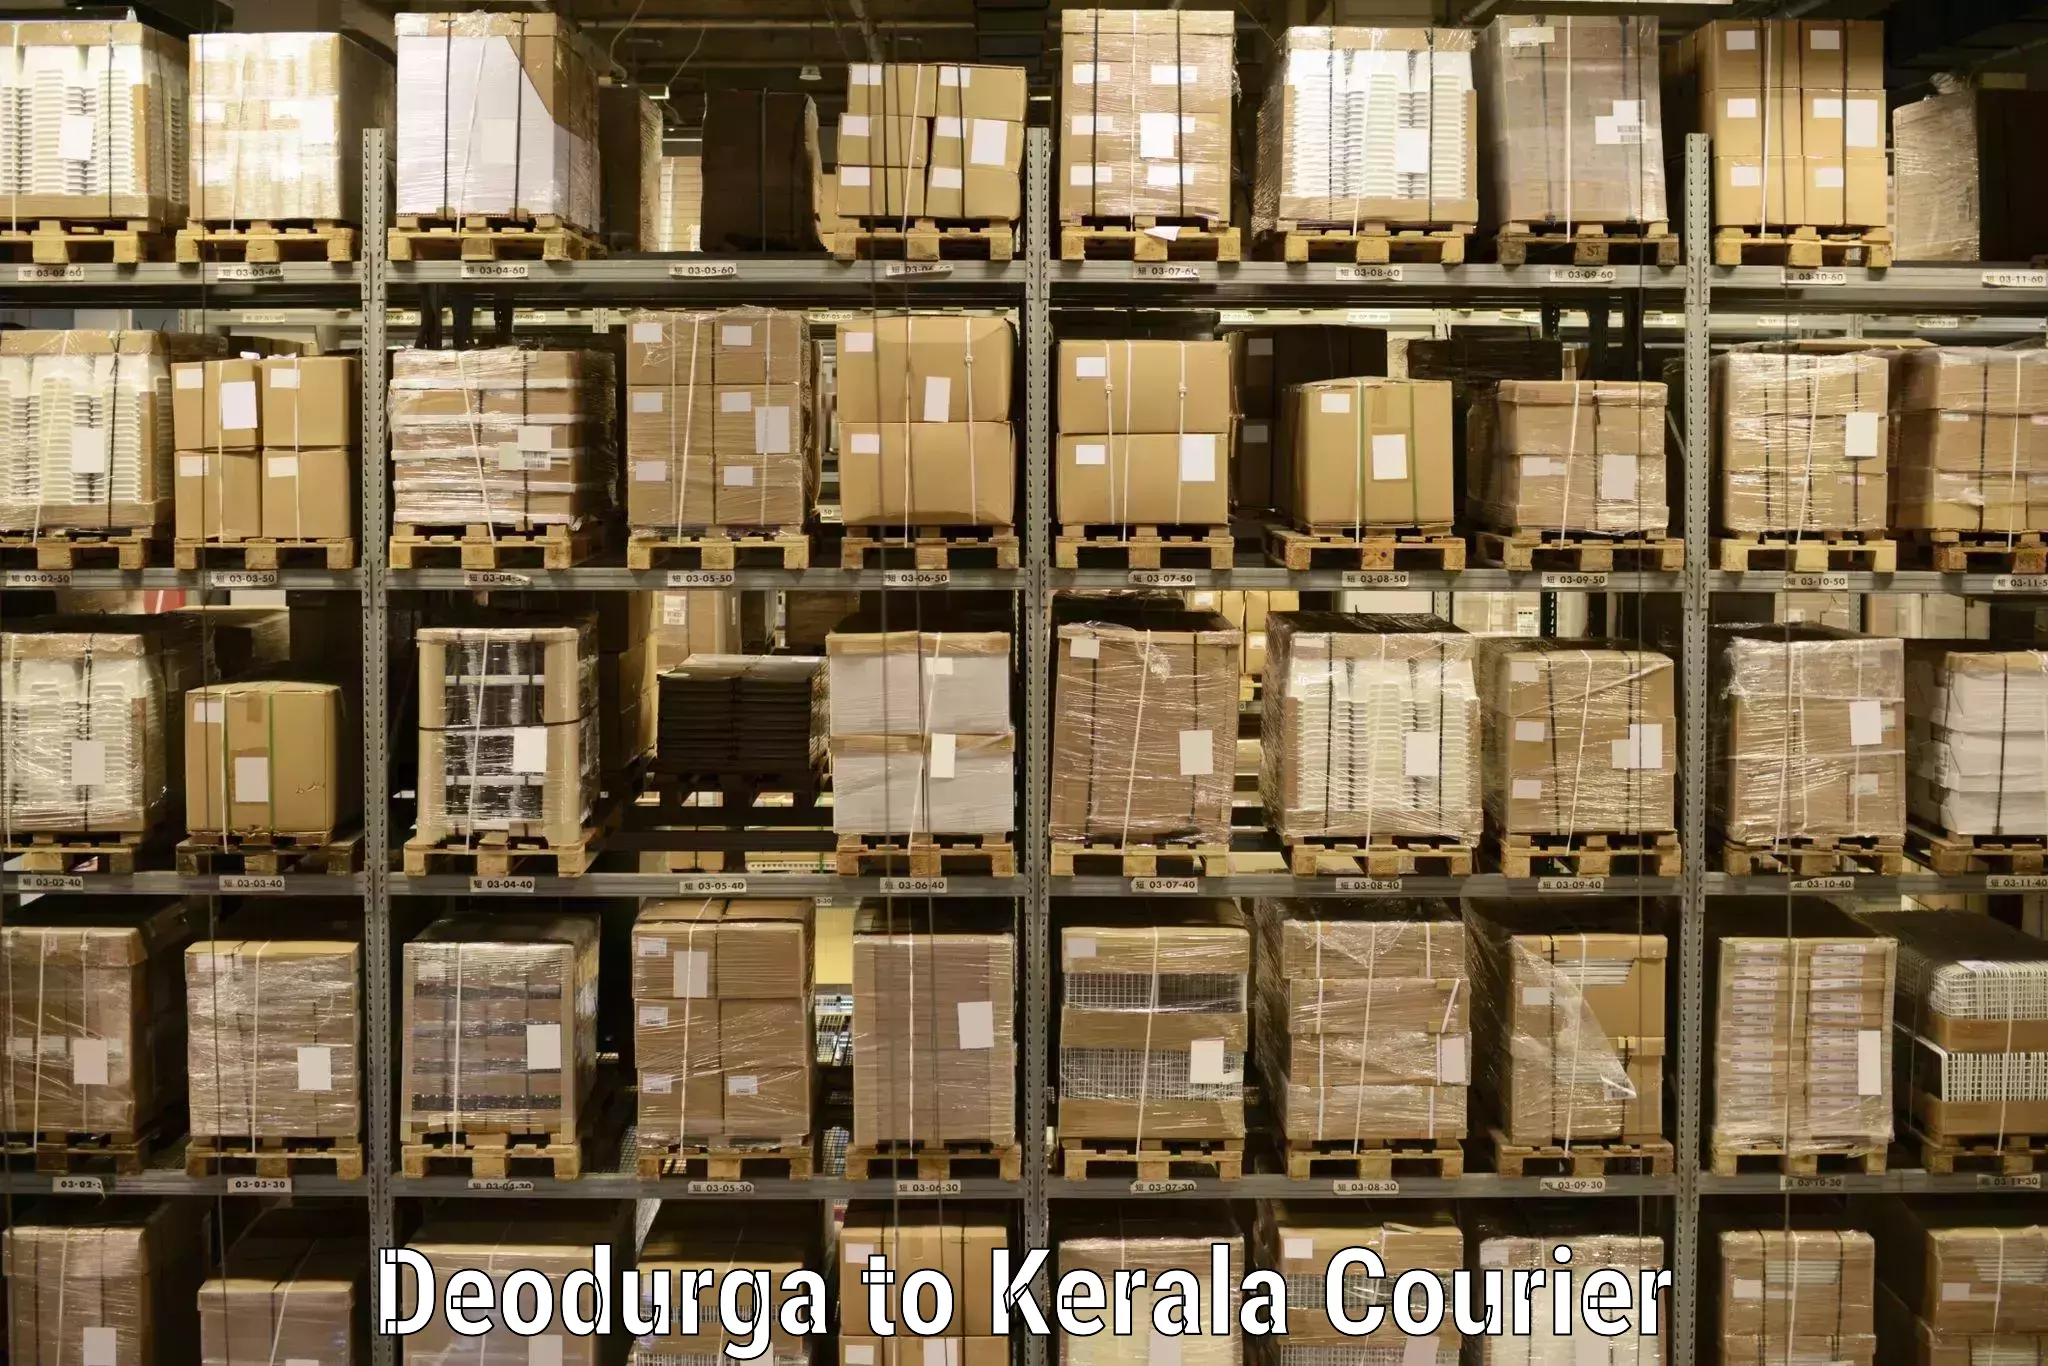 Quick dispatch service Deodurga to Puthukkad